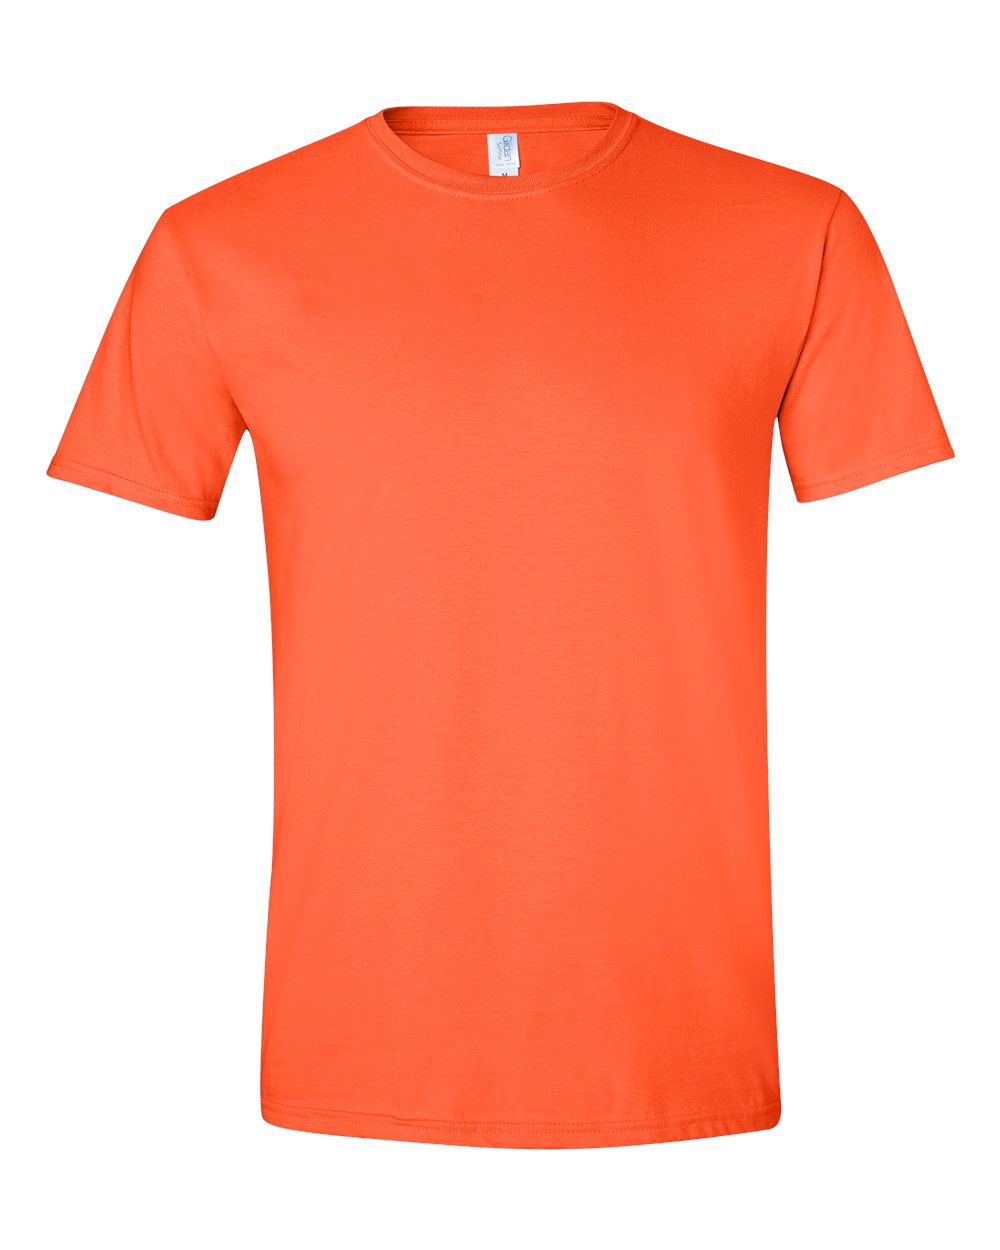 Pretreated Gildan 64000 Softstyle T-Shirt - Orange